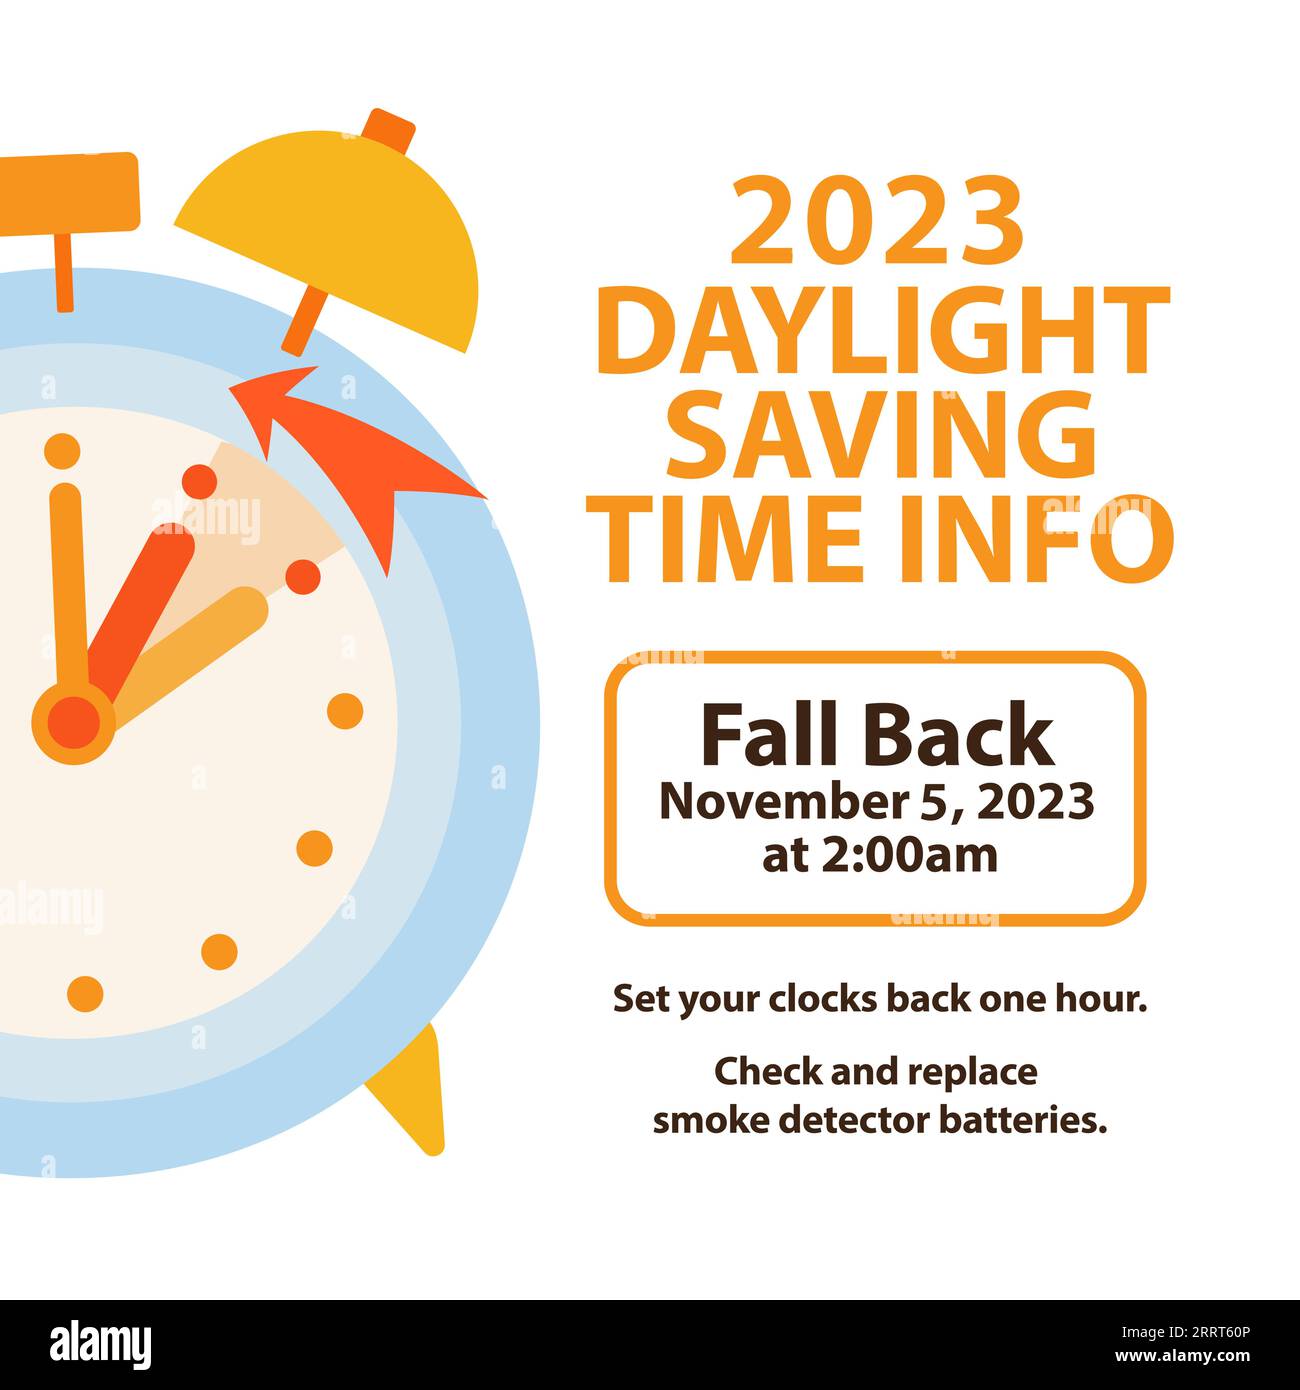 Daylight Savings Time 2023 Royalty-Free Images, Stock Photos